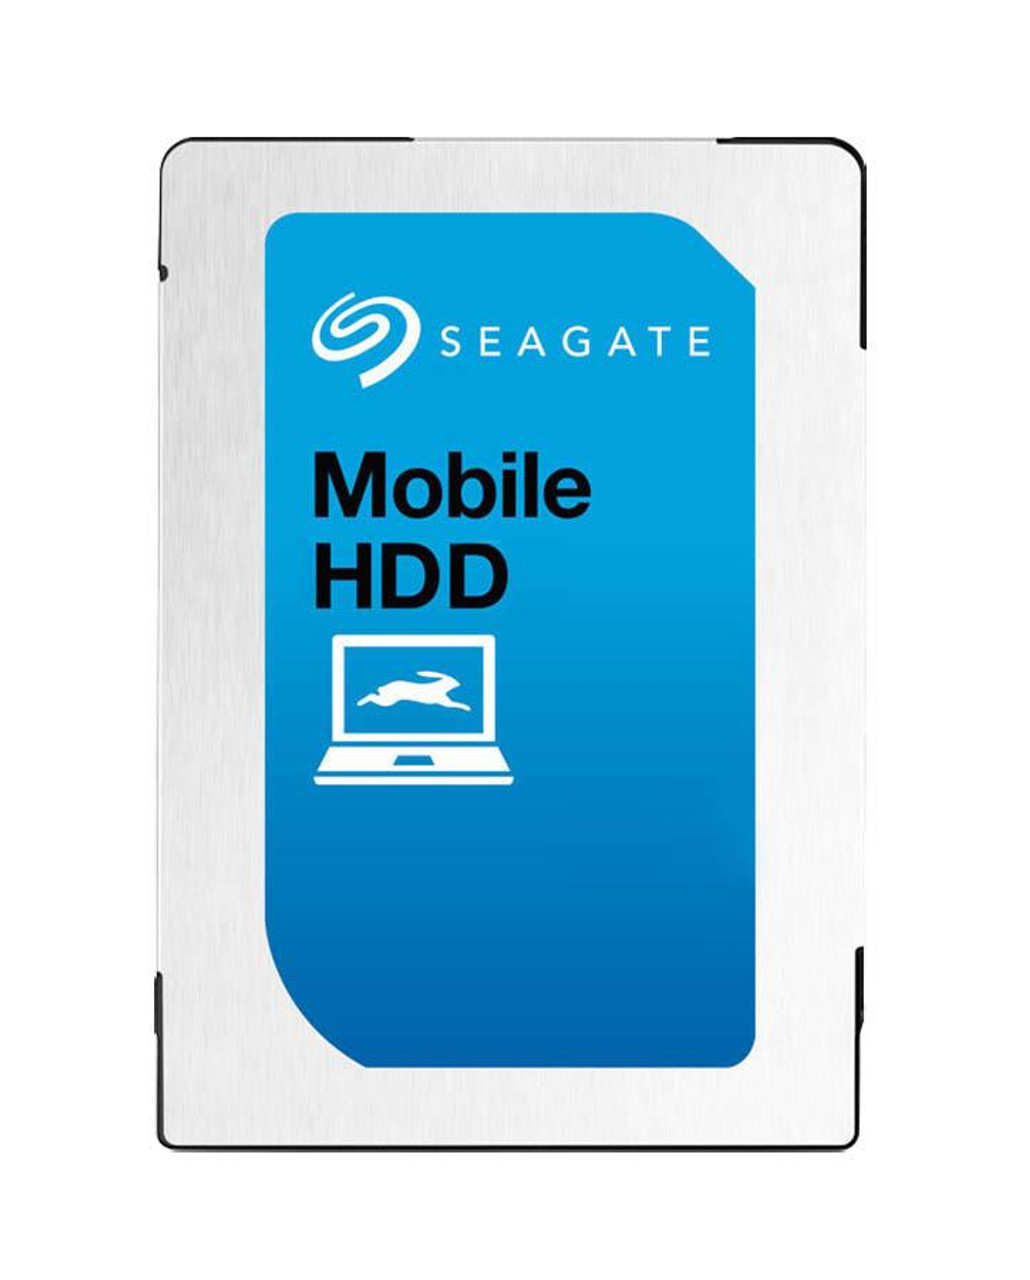 1R8174-8E0 Seagate Mobile HDD 2TB 5400RPM SATA 6Gbps 128MB Cache 2.5-inch Internal Hard Drive